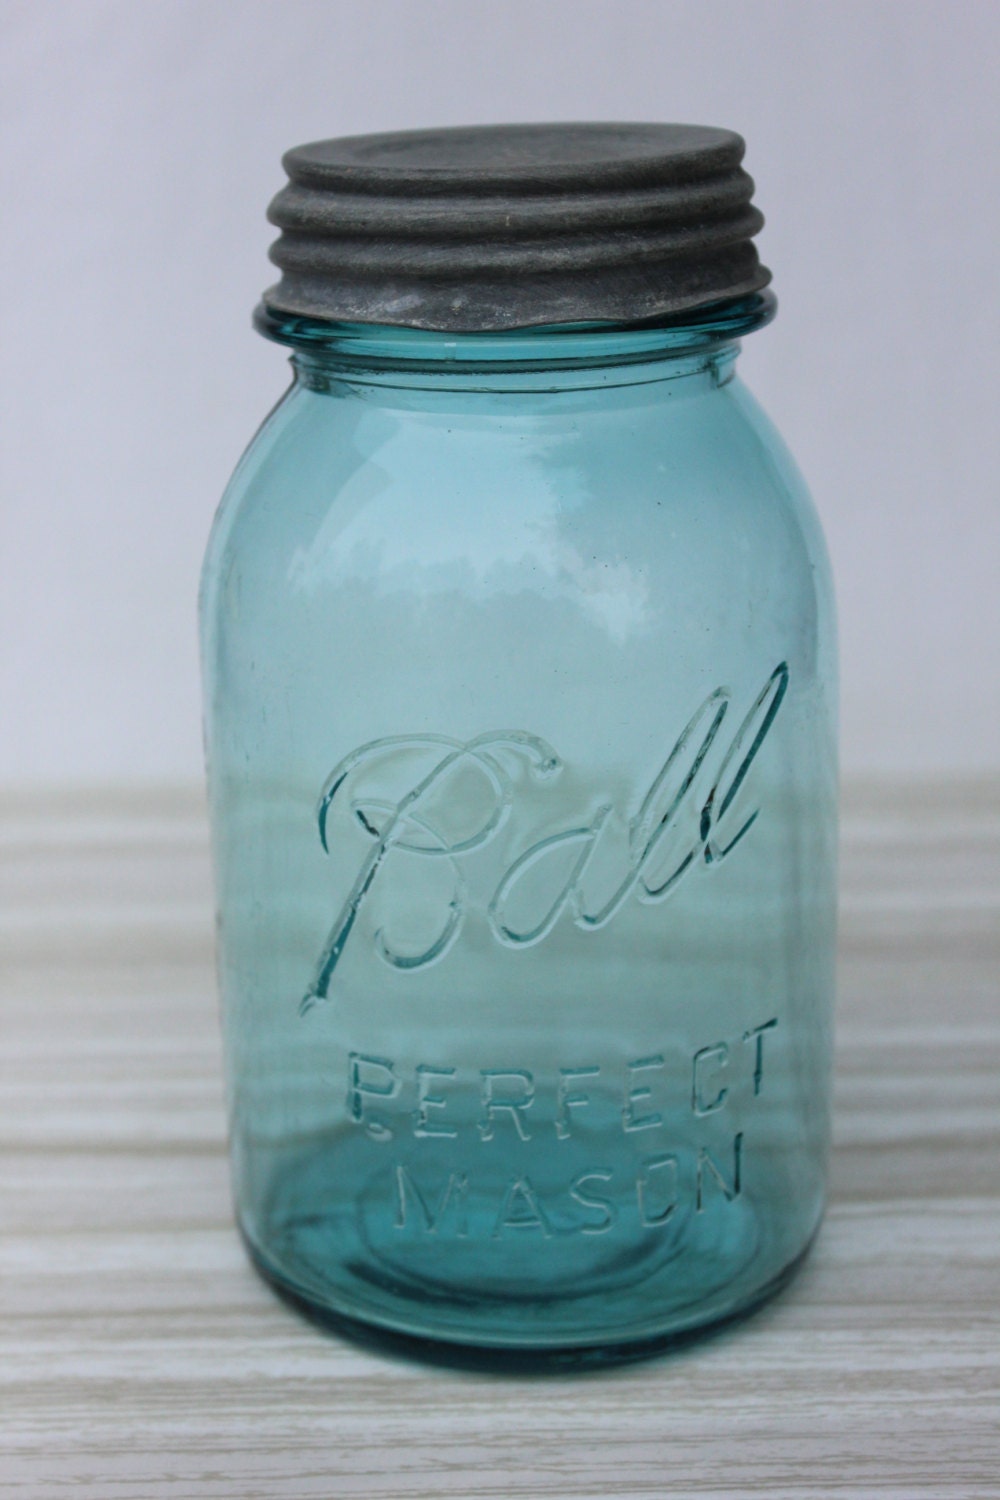 rare most valuable mason jars